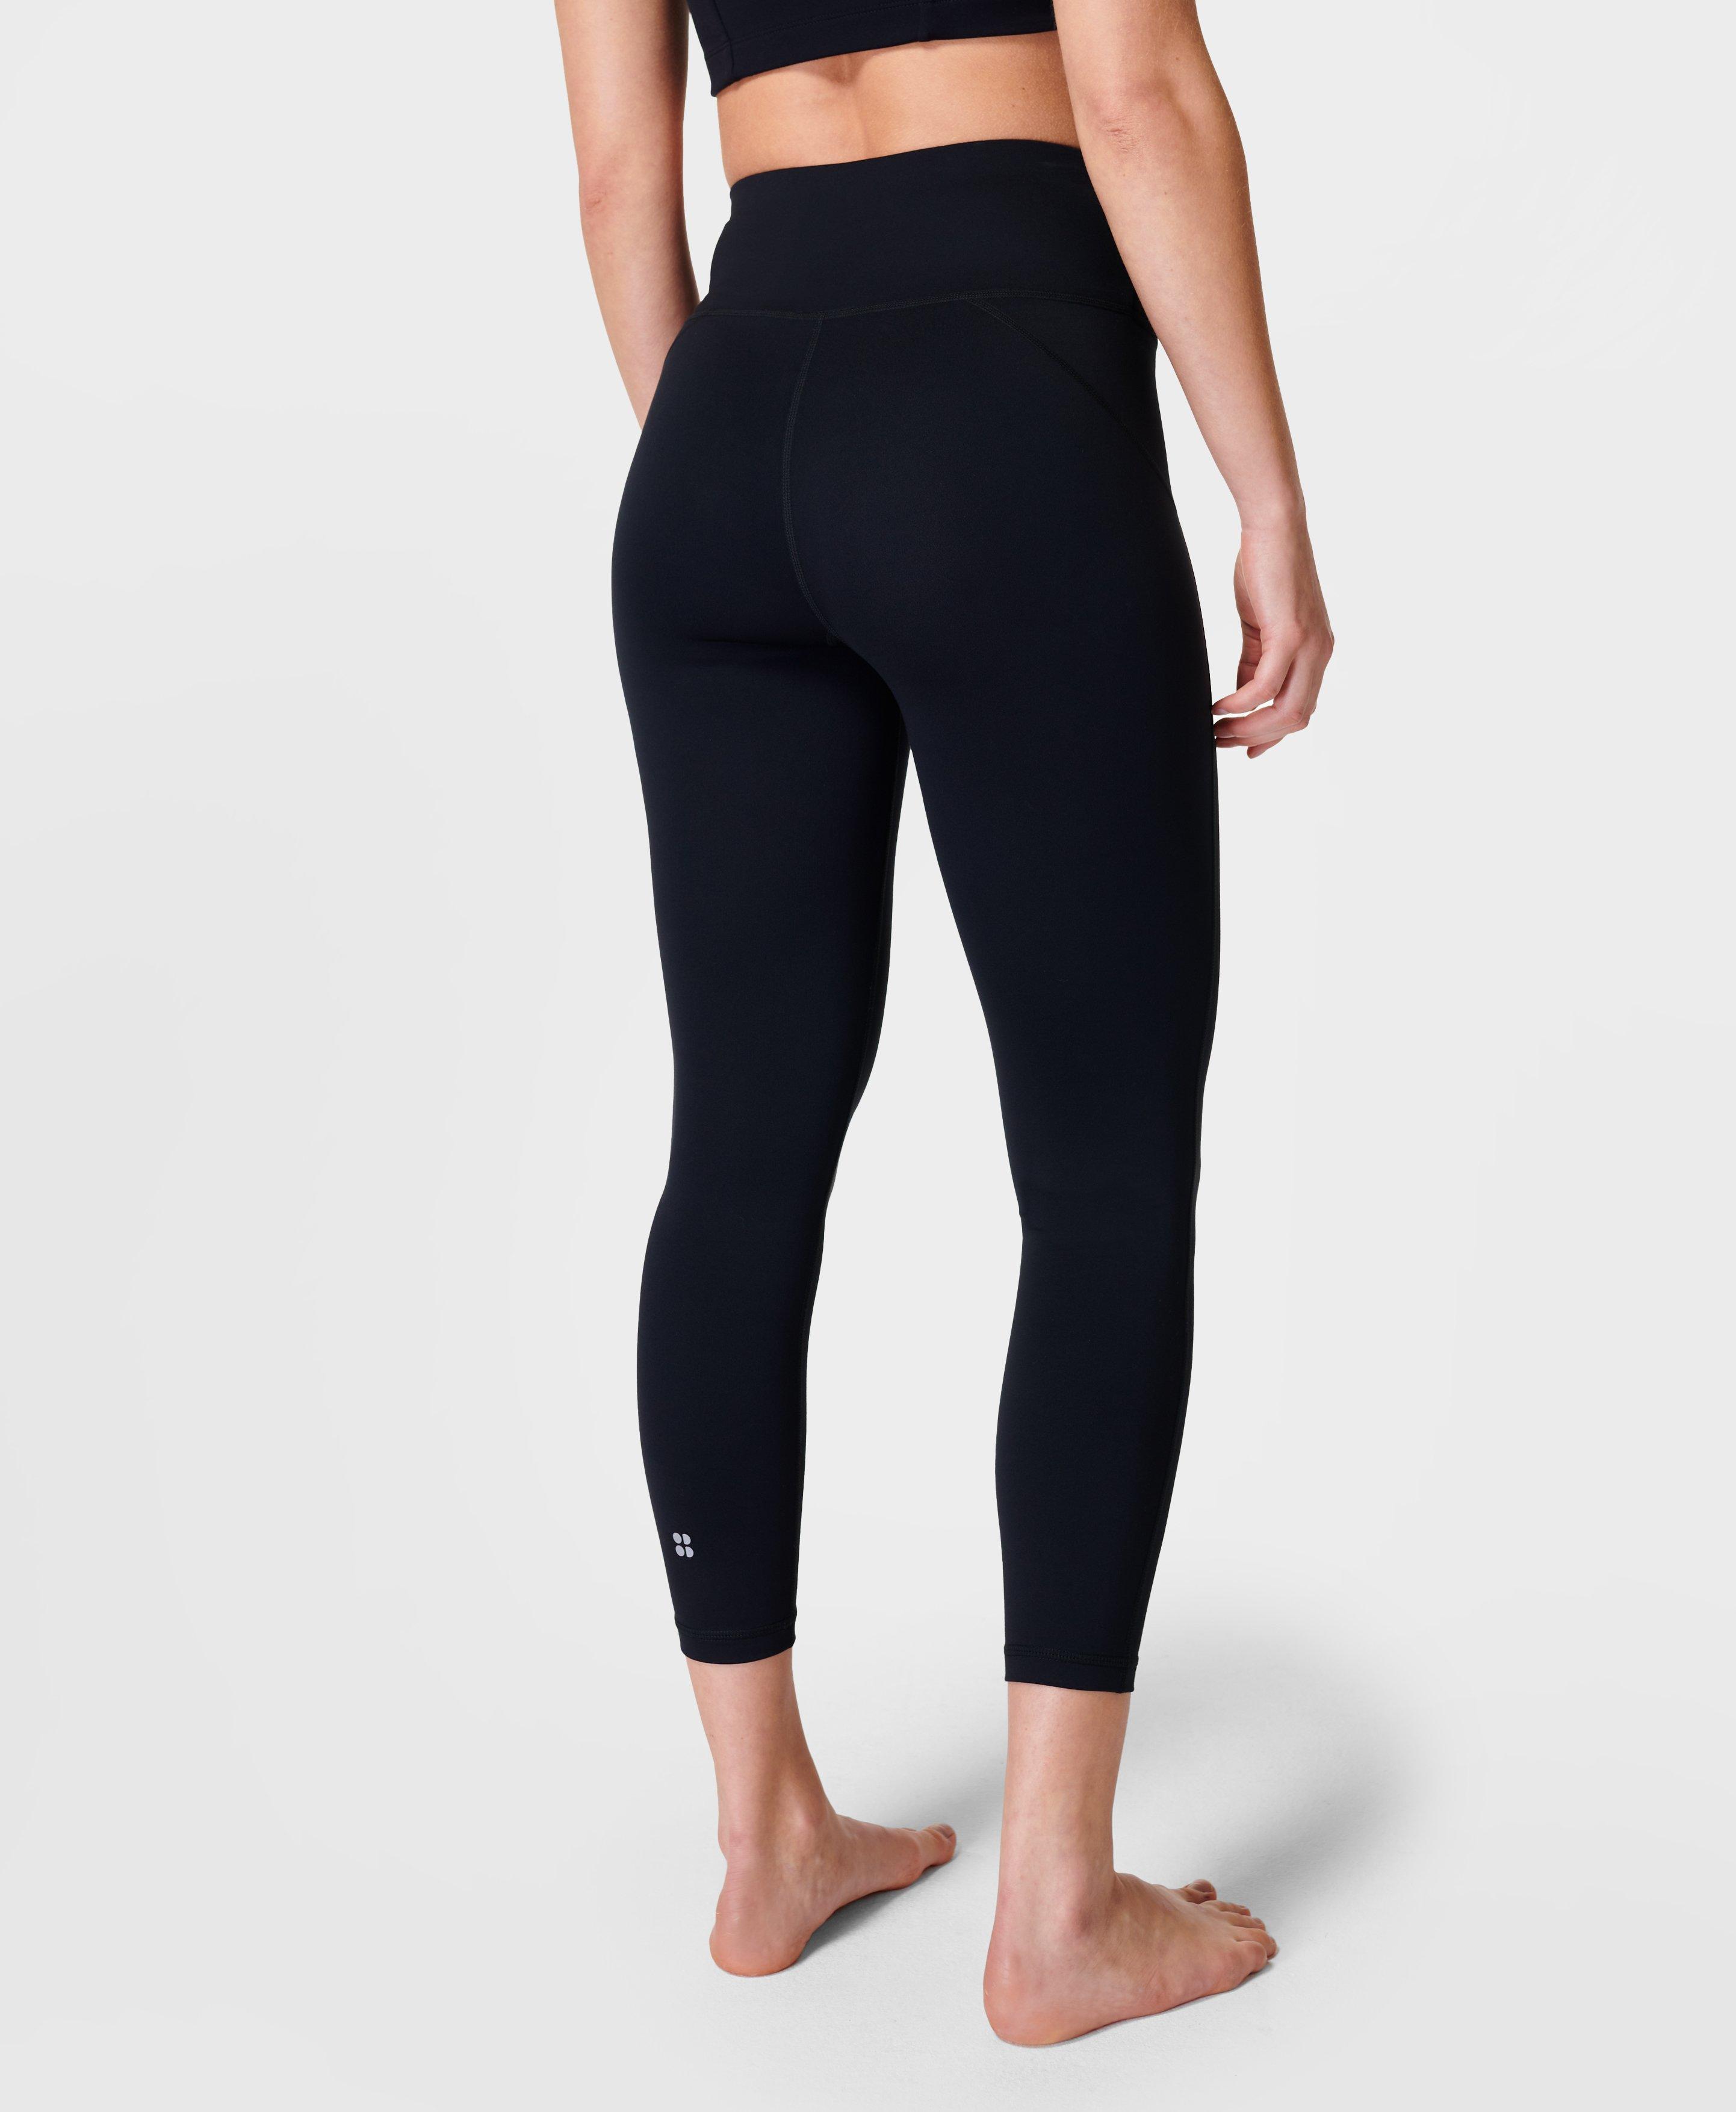 Sweaty Betty Women's Size XS All Day 7/8 Leggings Black Split Camo Print